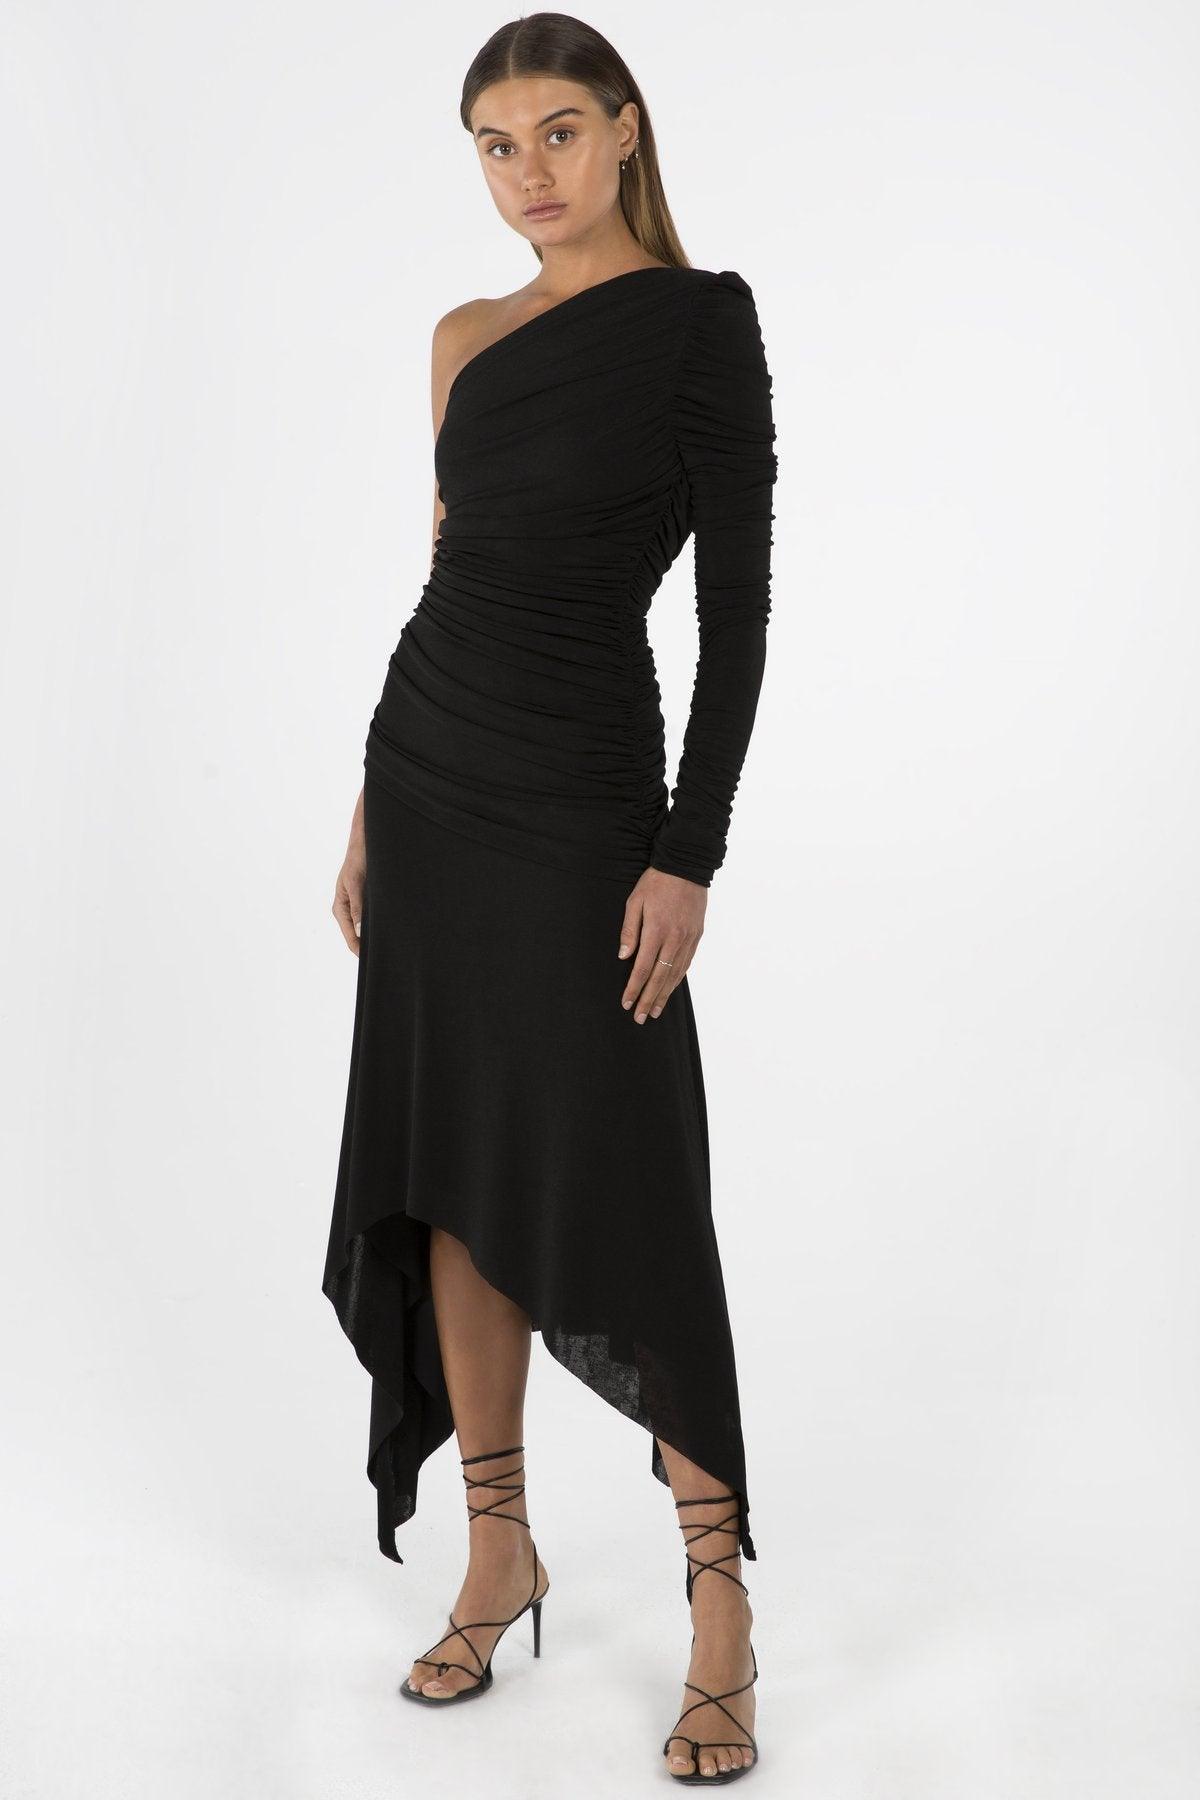 Misha Collection Jordanne Dress - Black - SHOPJAUS - JAUS